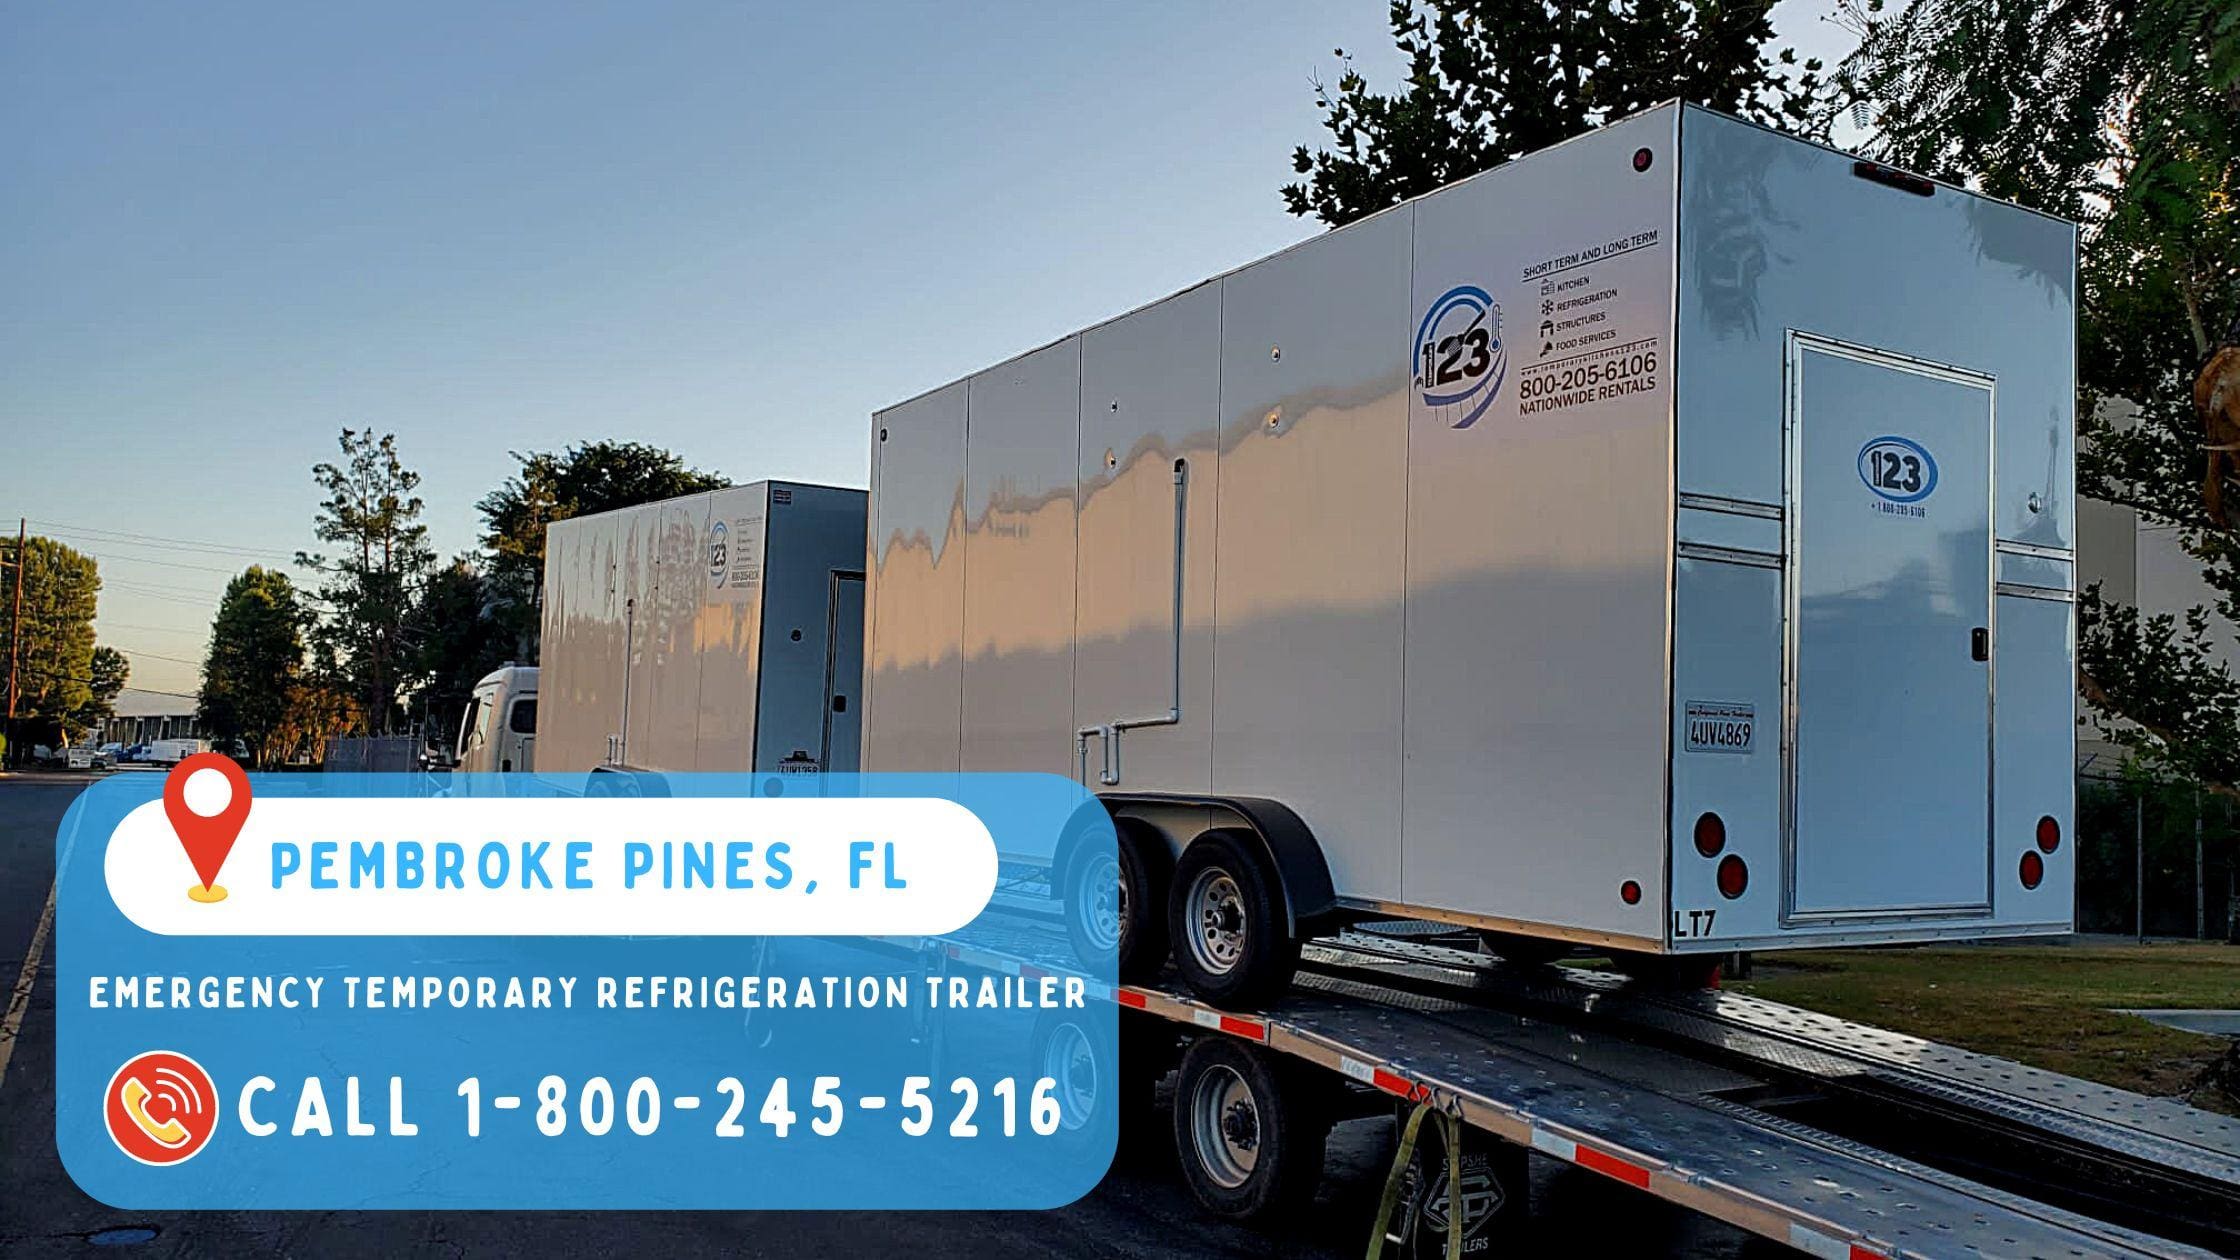 Emergency Temporary refrigeration trailer in Pembroke Pines